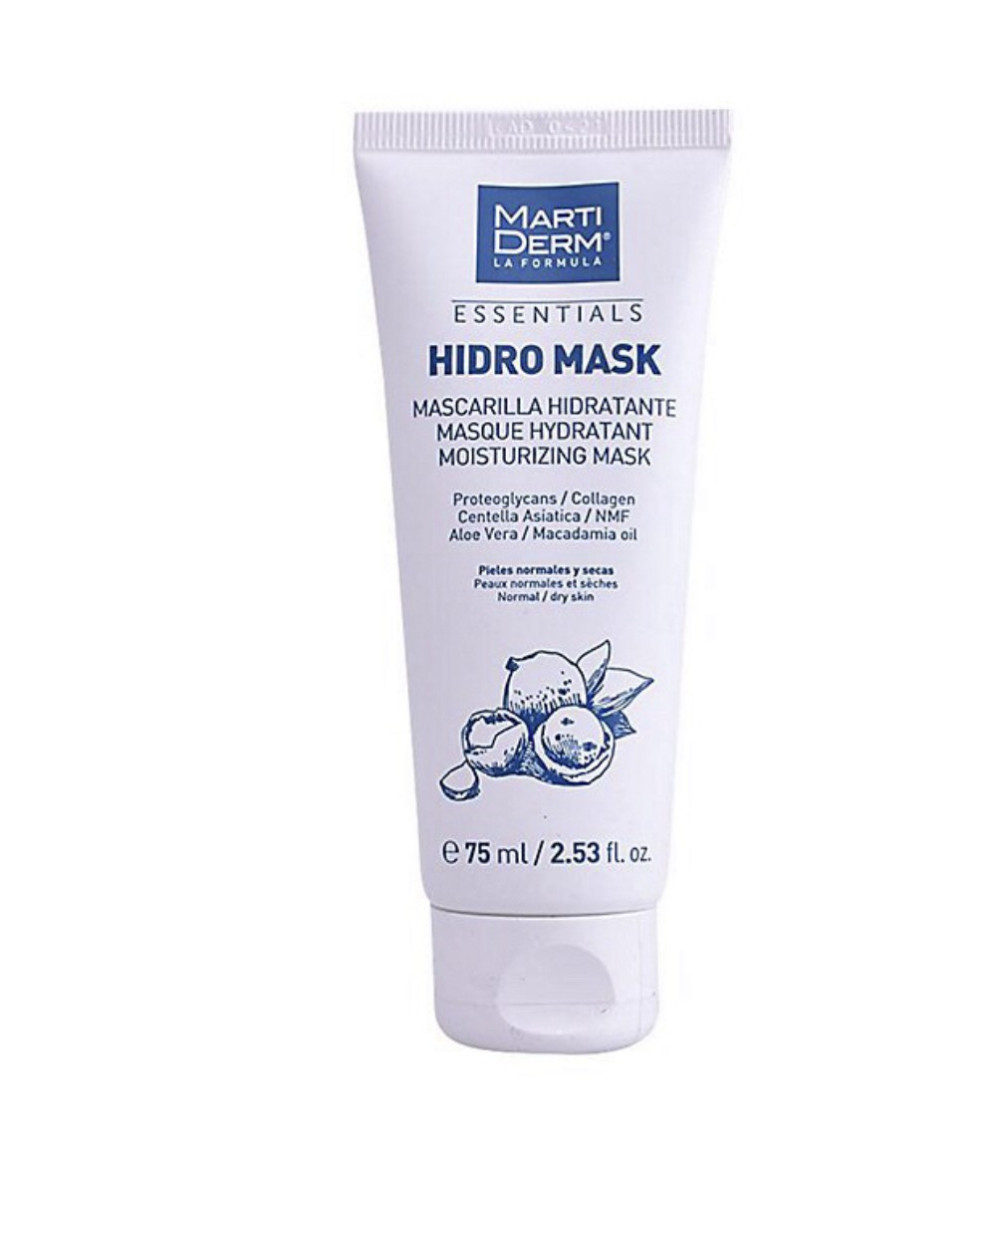 Marti Derm Hidro Mask 75ml piel normal / seca